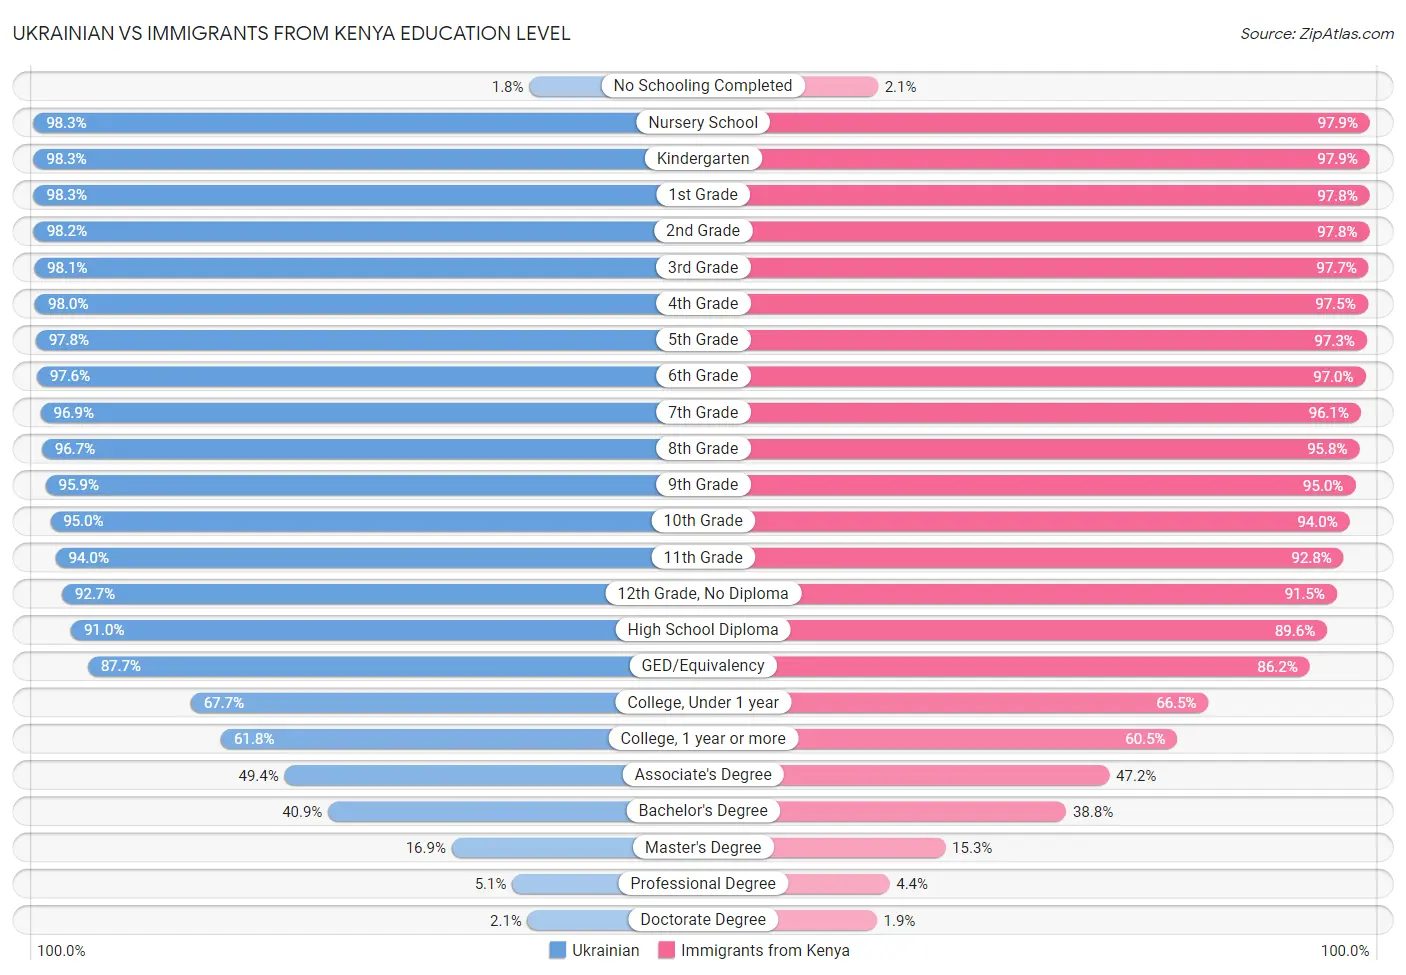 Ukrainian vs Immigrants from Kenya Education Level